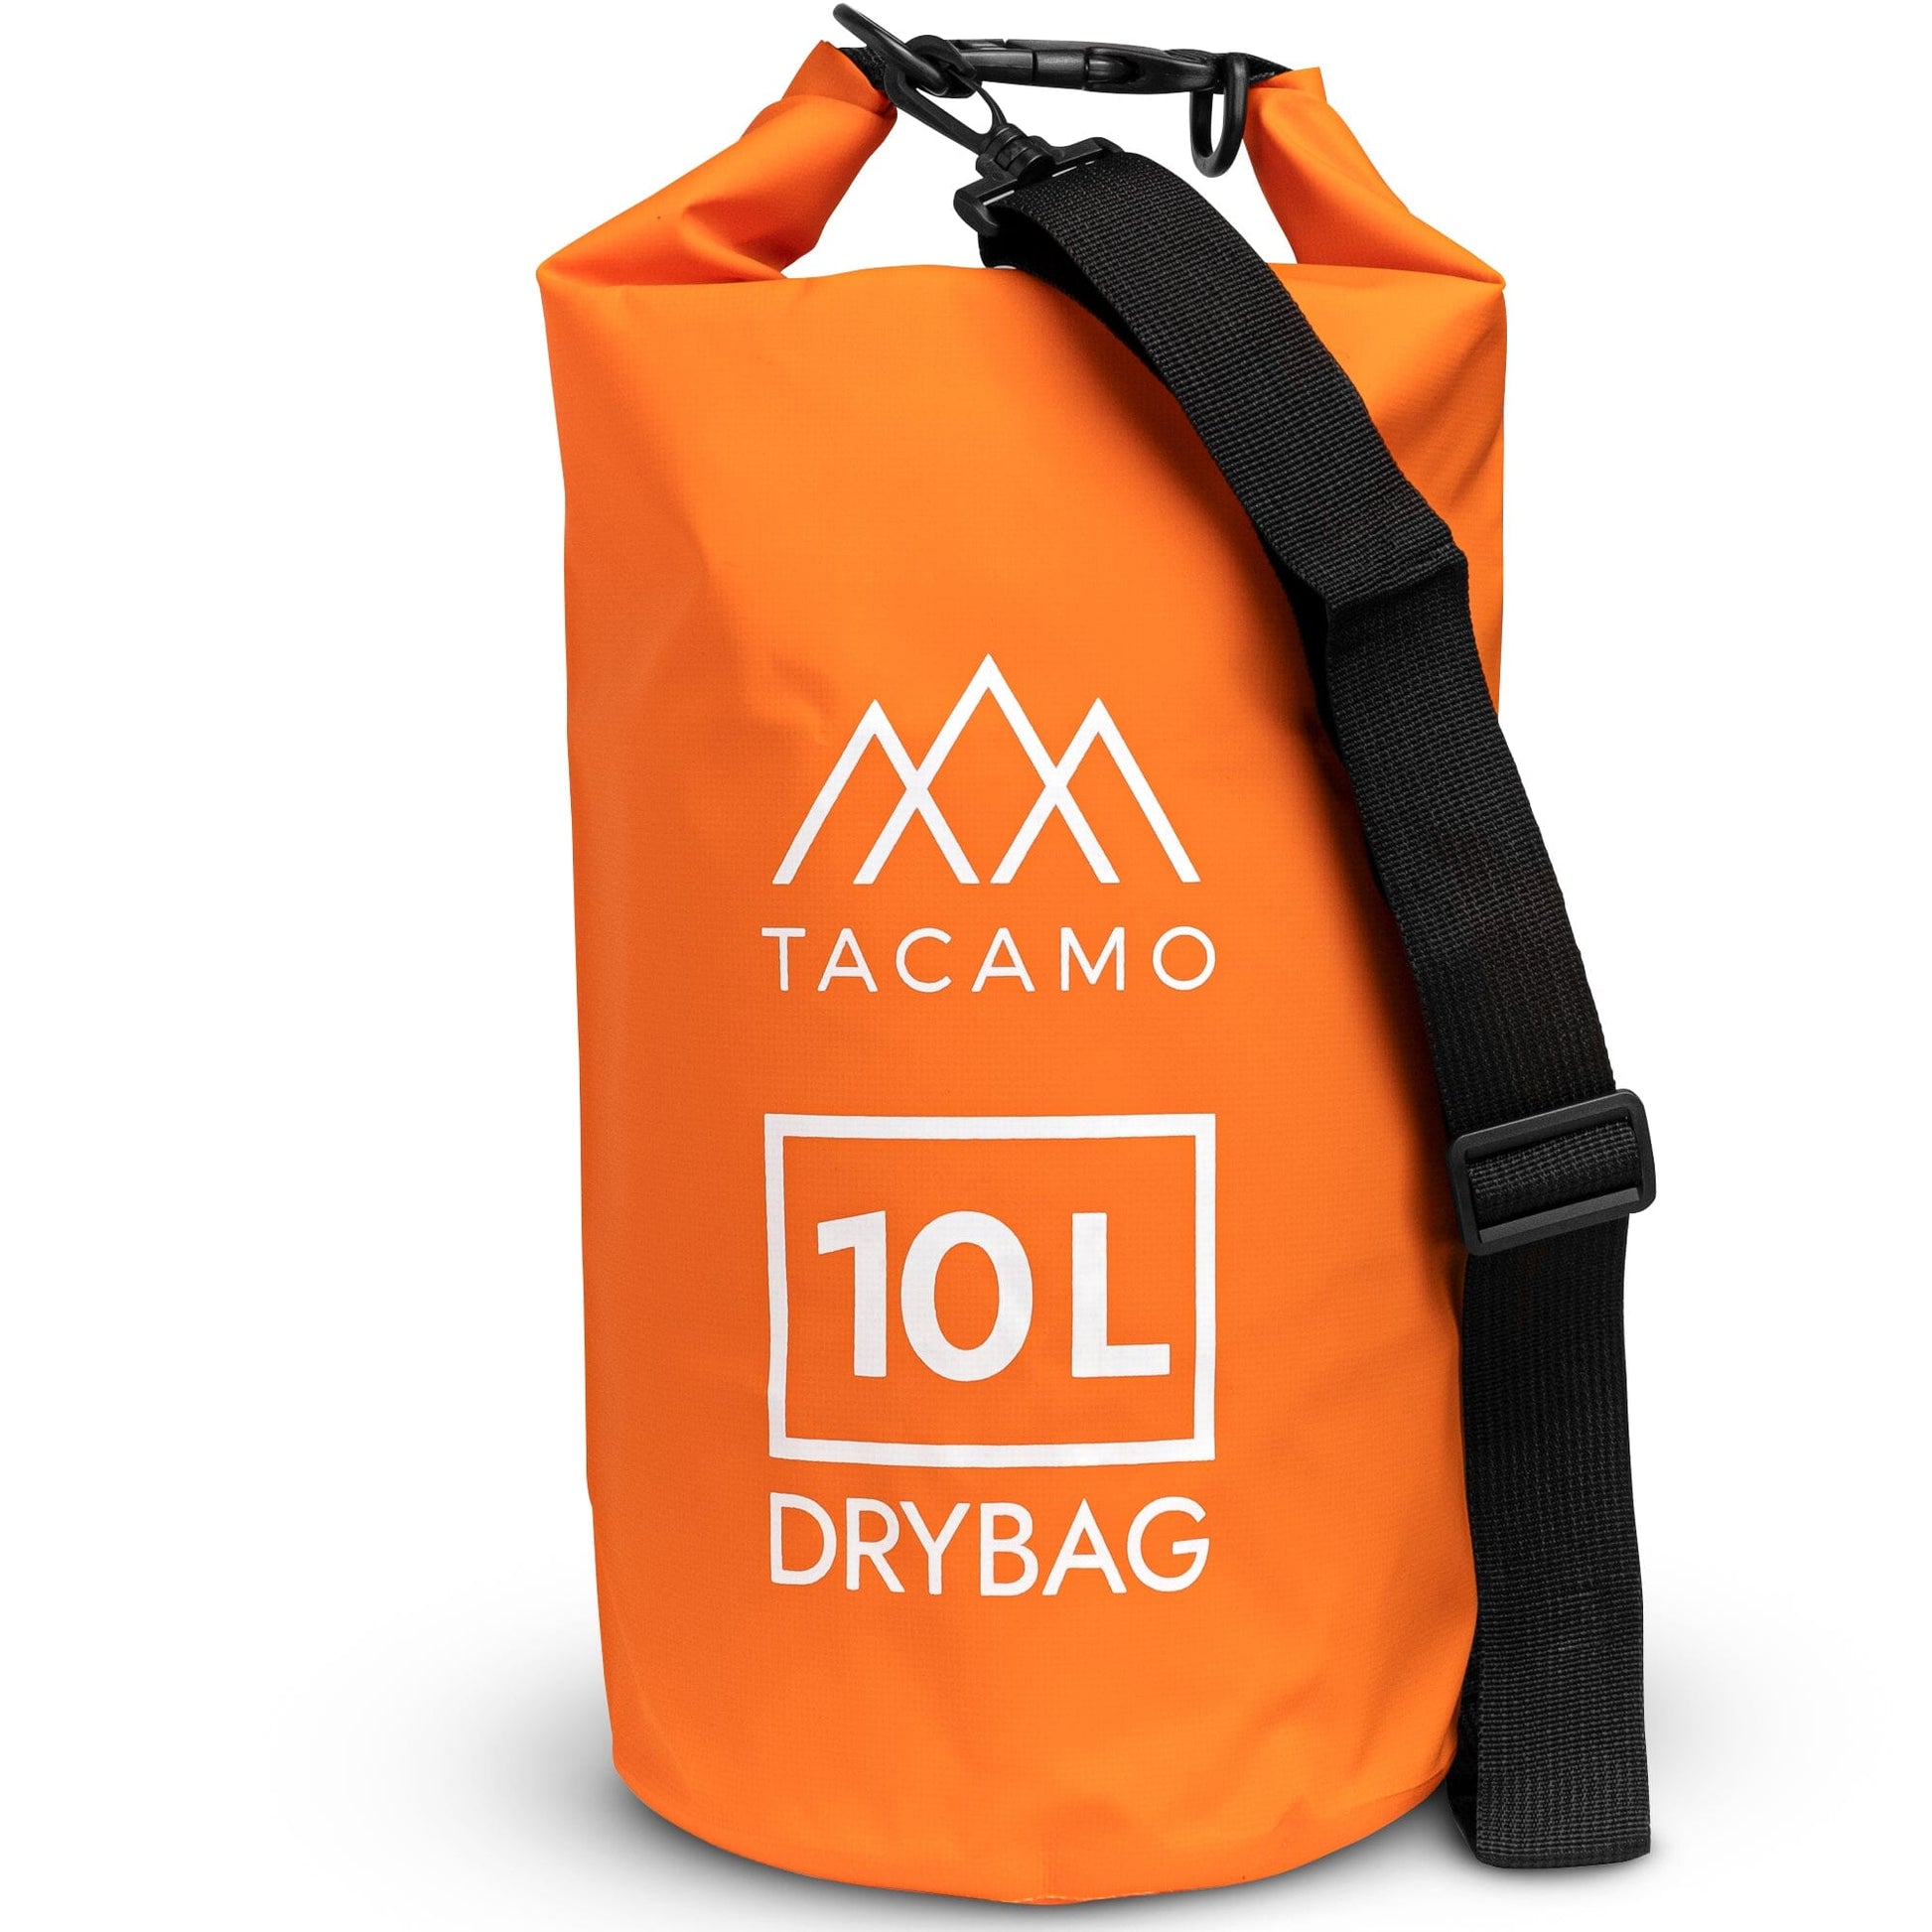 TACAMO 10L dry bag detailing